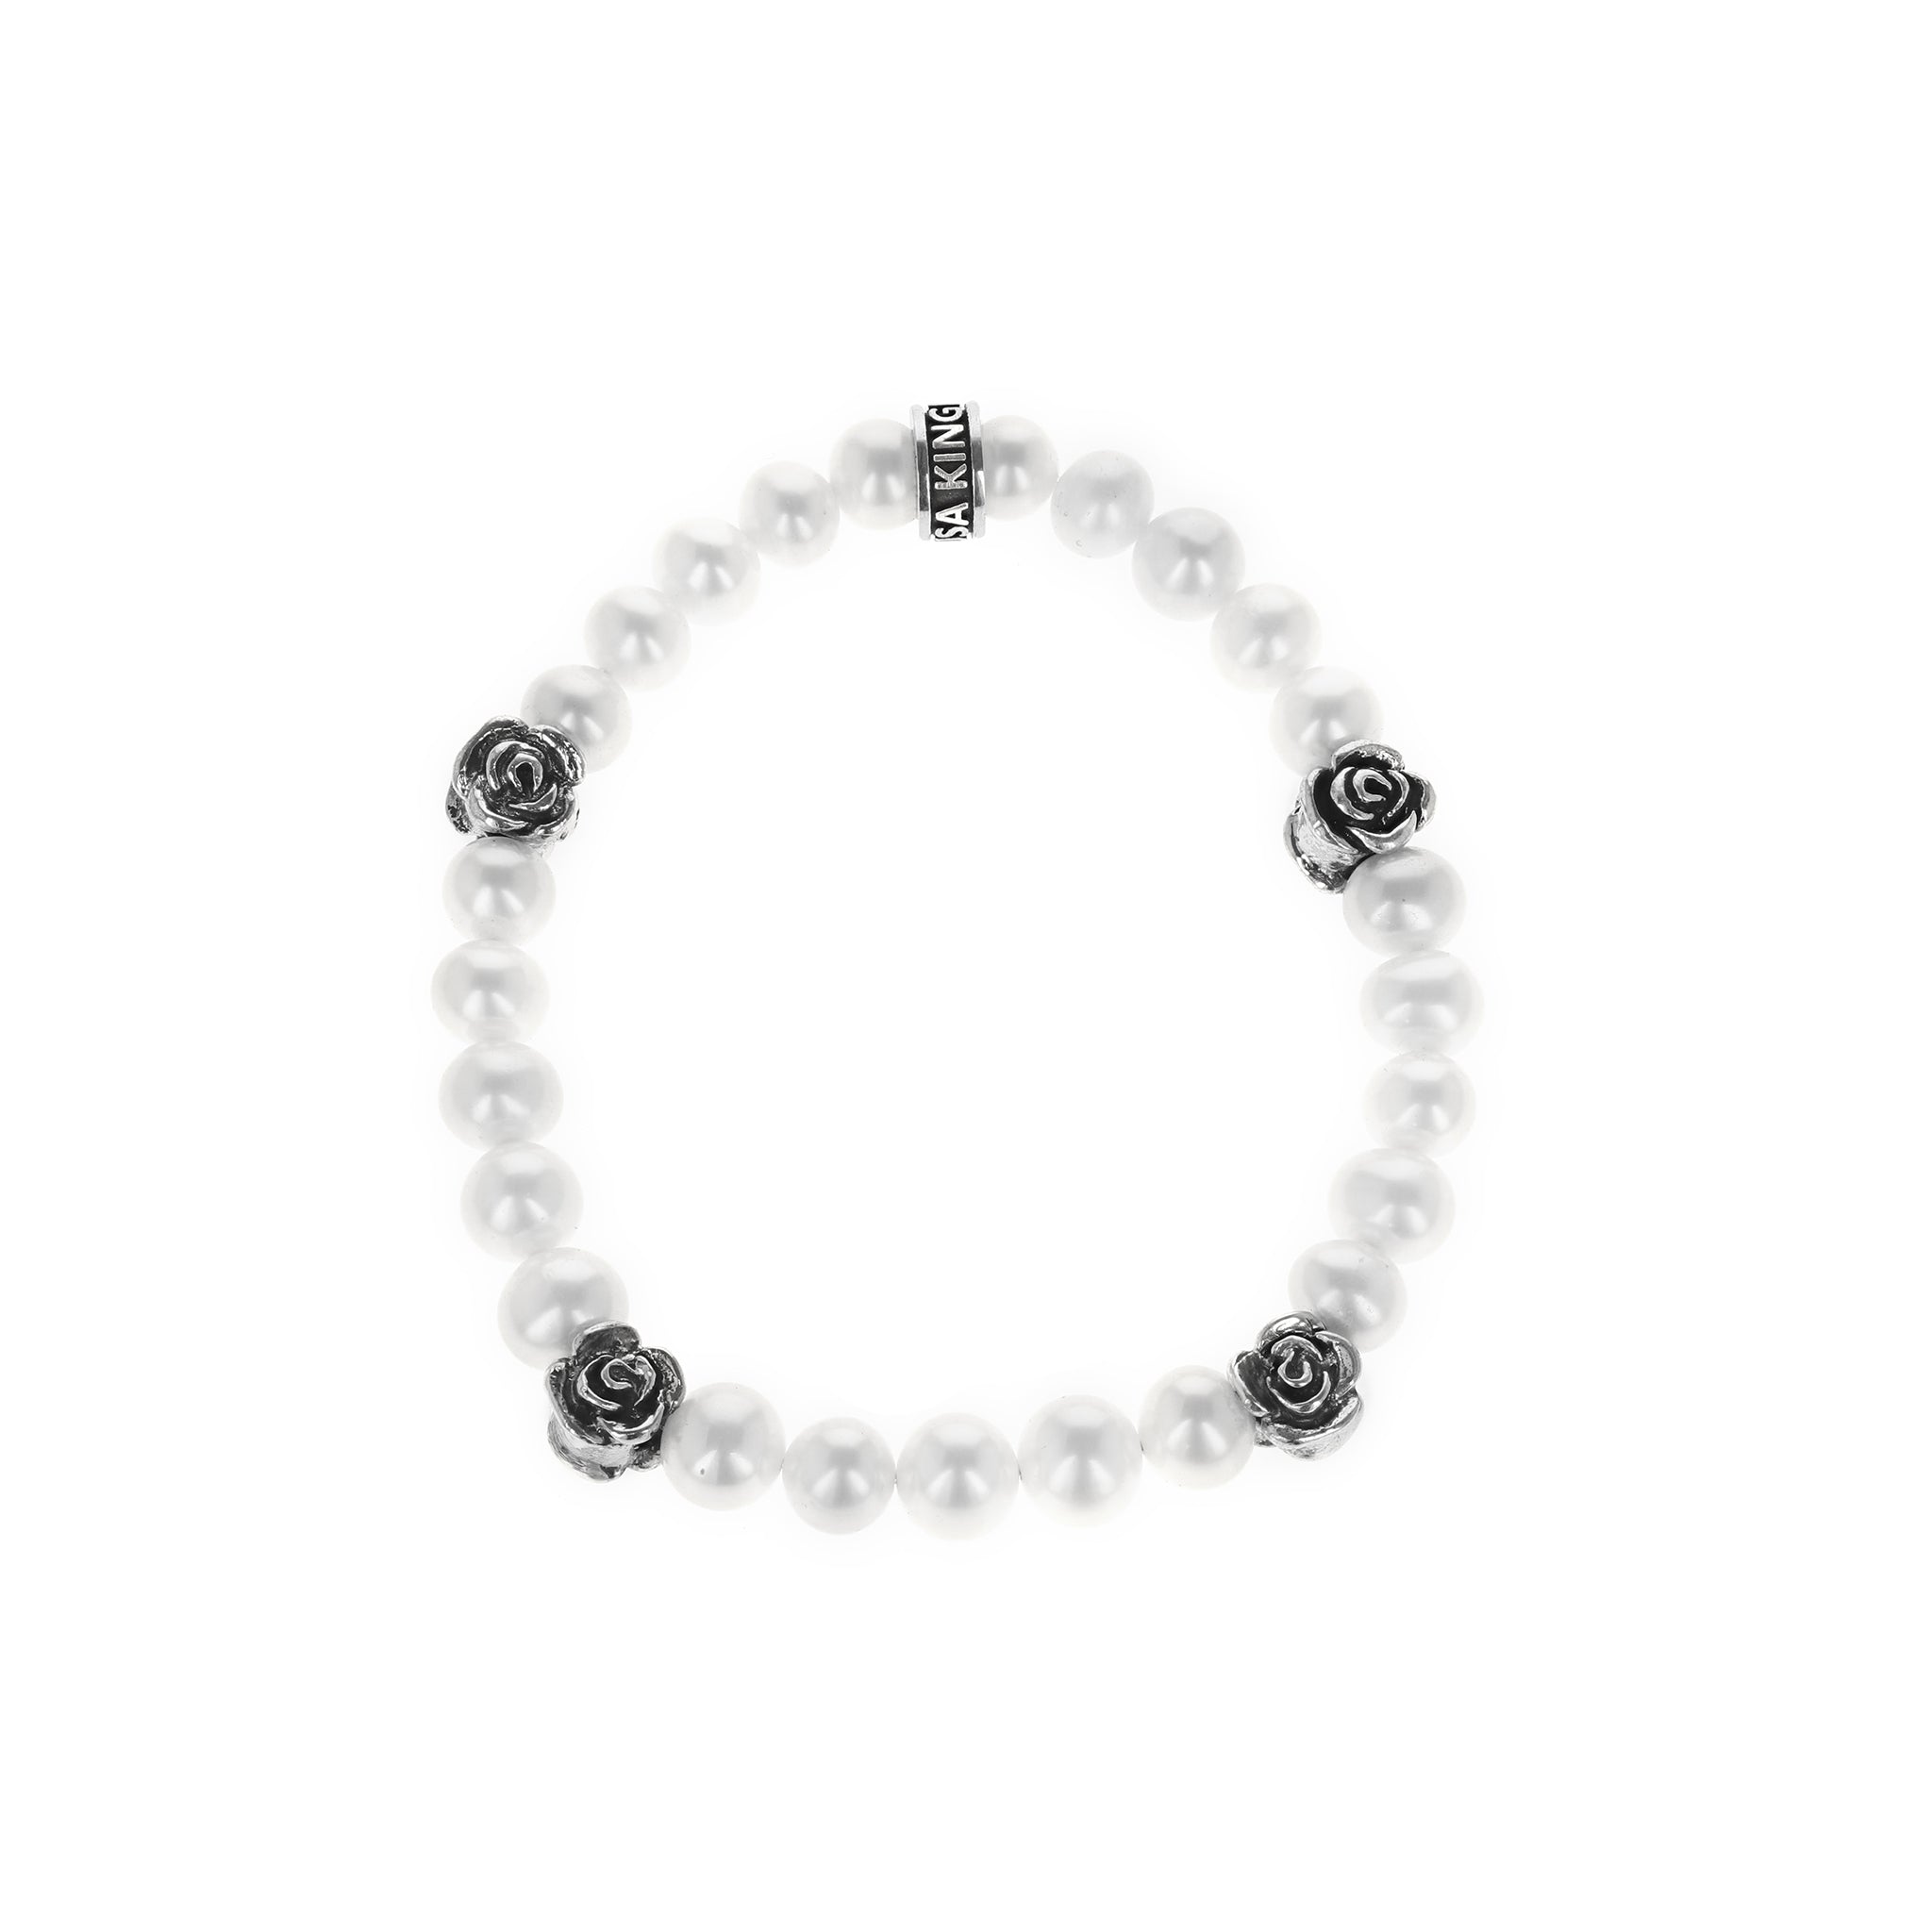 8mm White Pearl Bracelet w/ 4 Silver Rose Beads